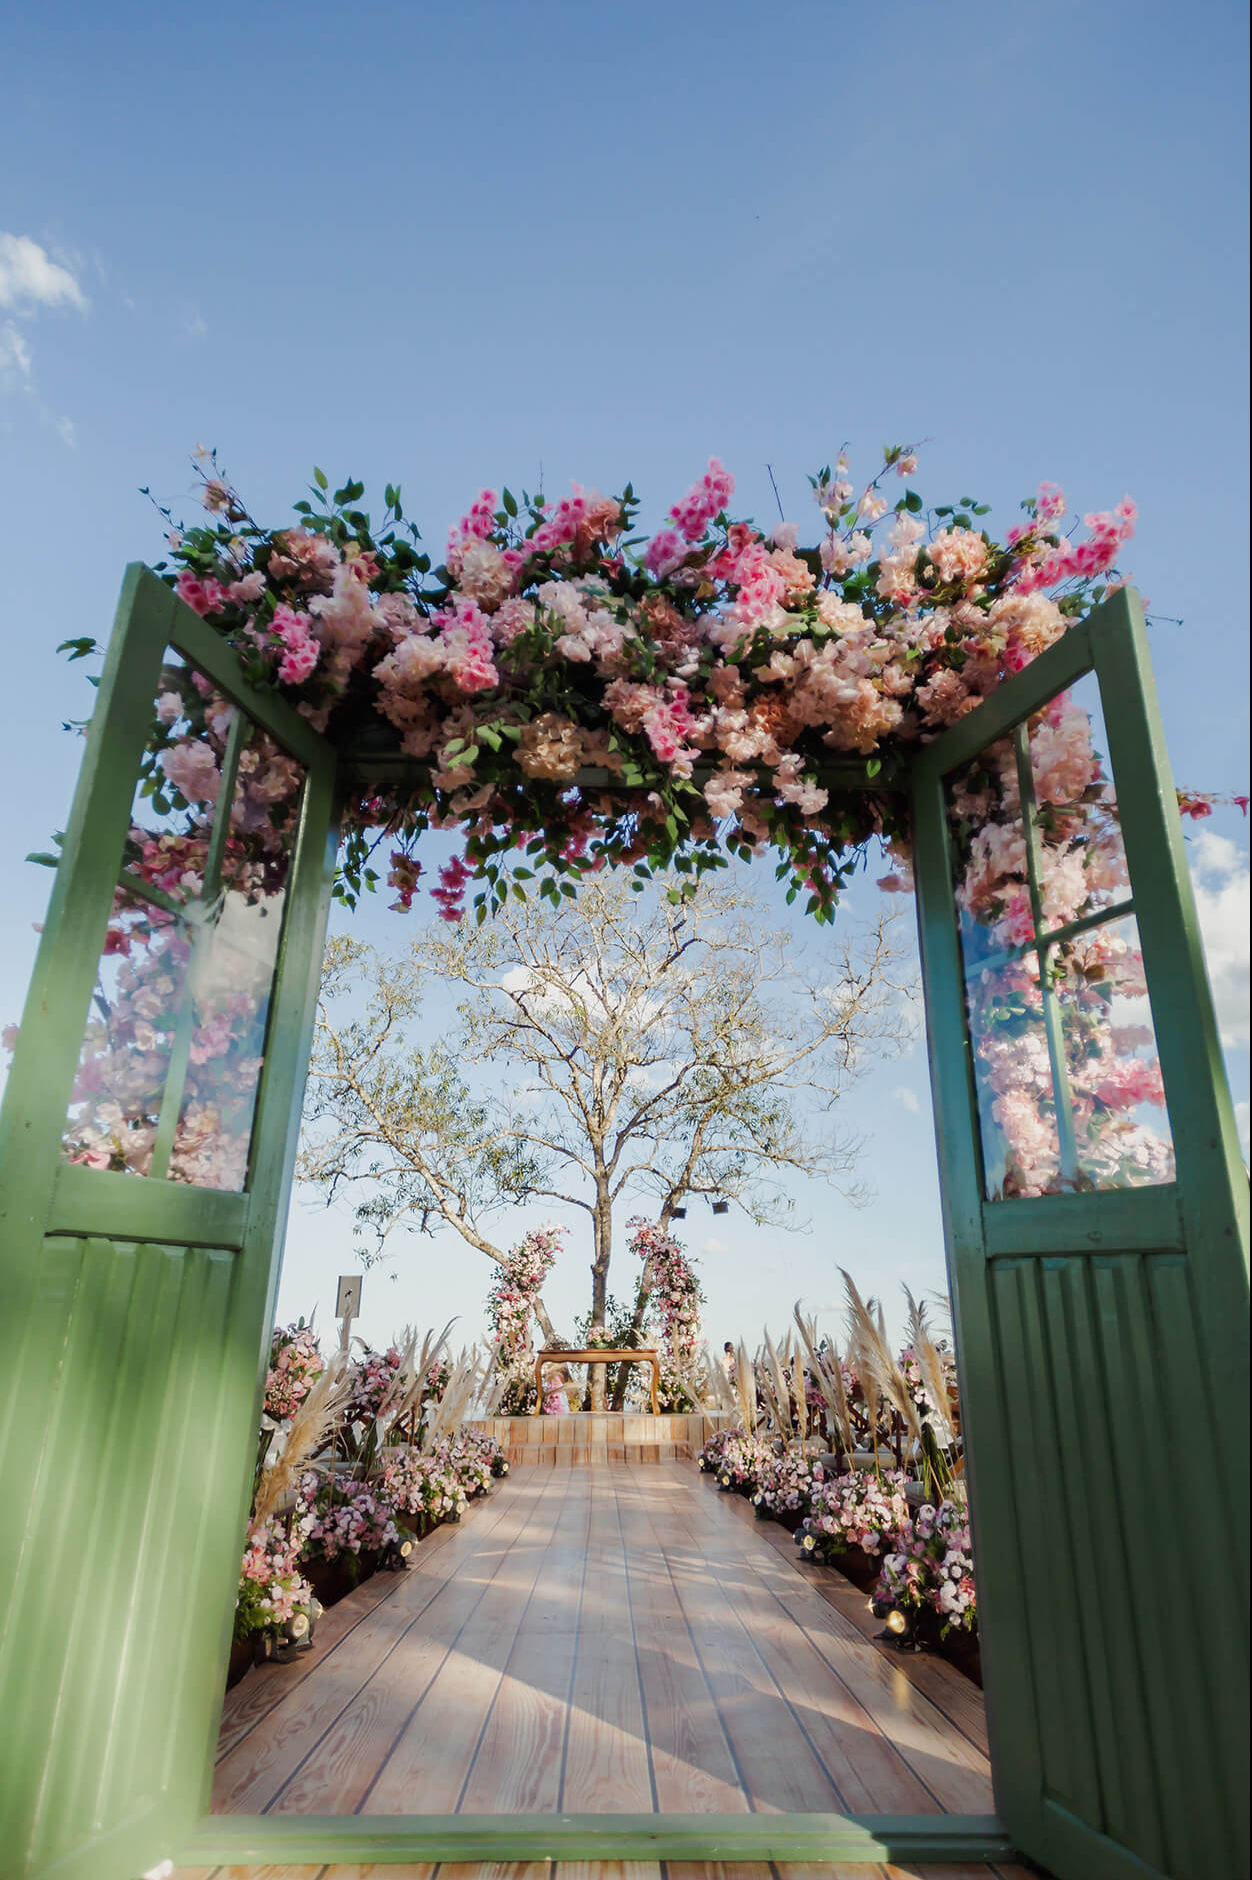 :Portas veredes decorativas com arranjo floral cor de rosa no campo